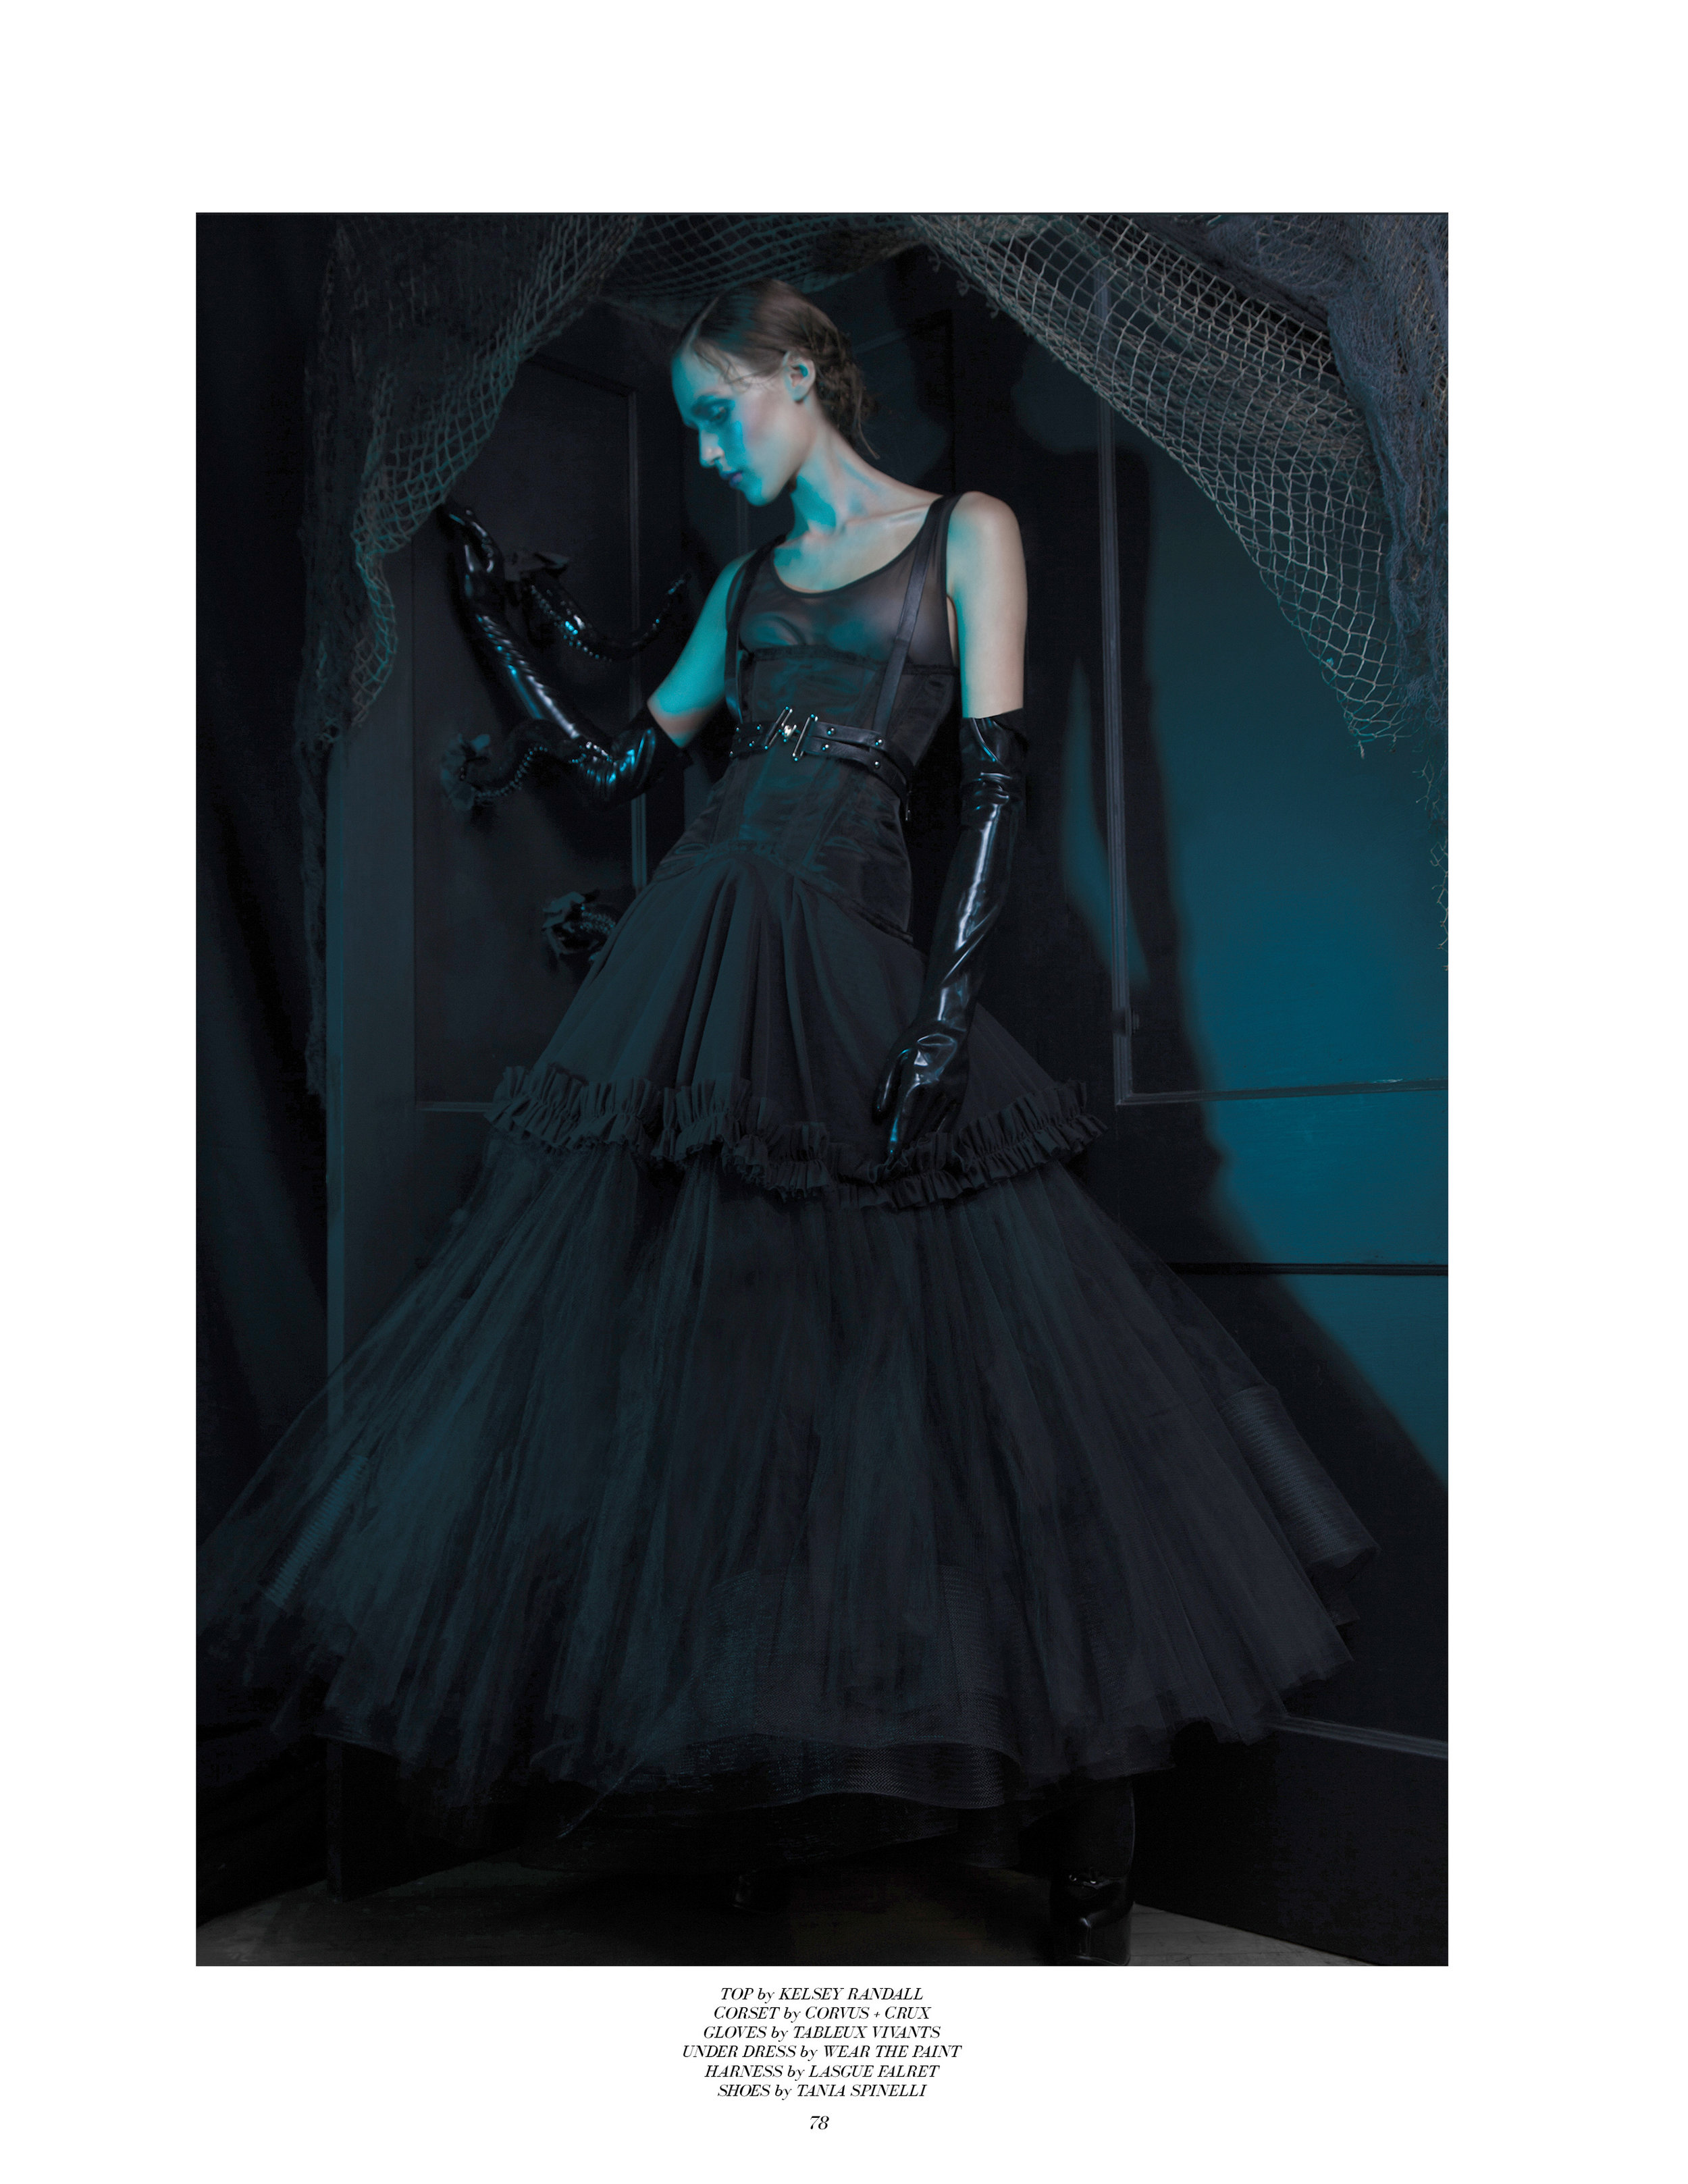 Copy of style noir magazine editorial featuring kelsey randall black mesh crinoline dress sheer ruffle hem godets